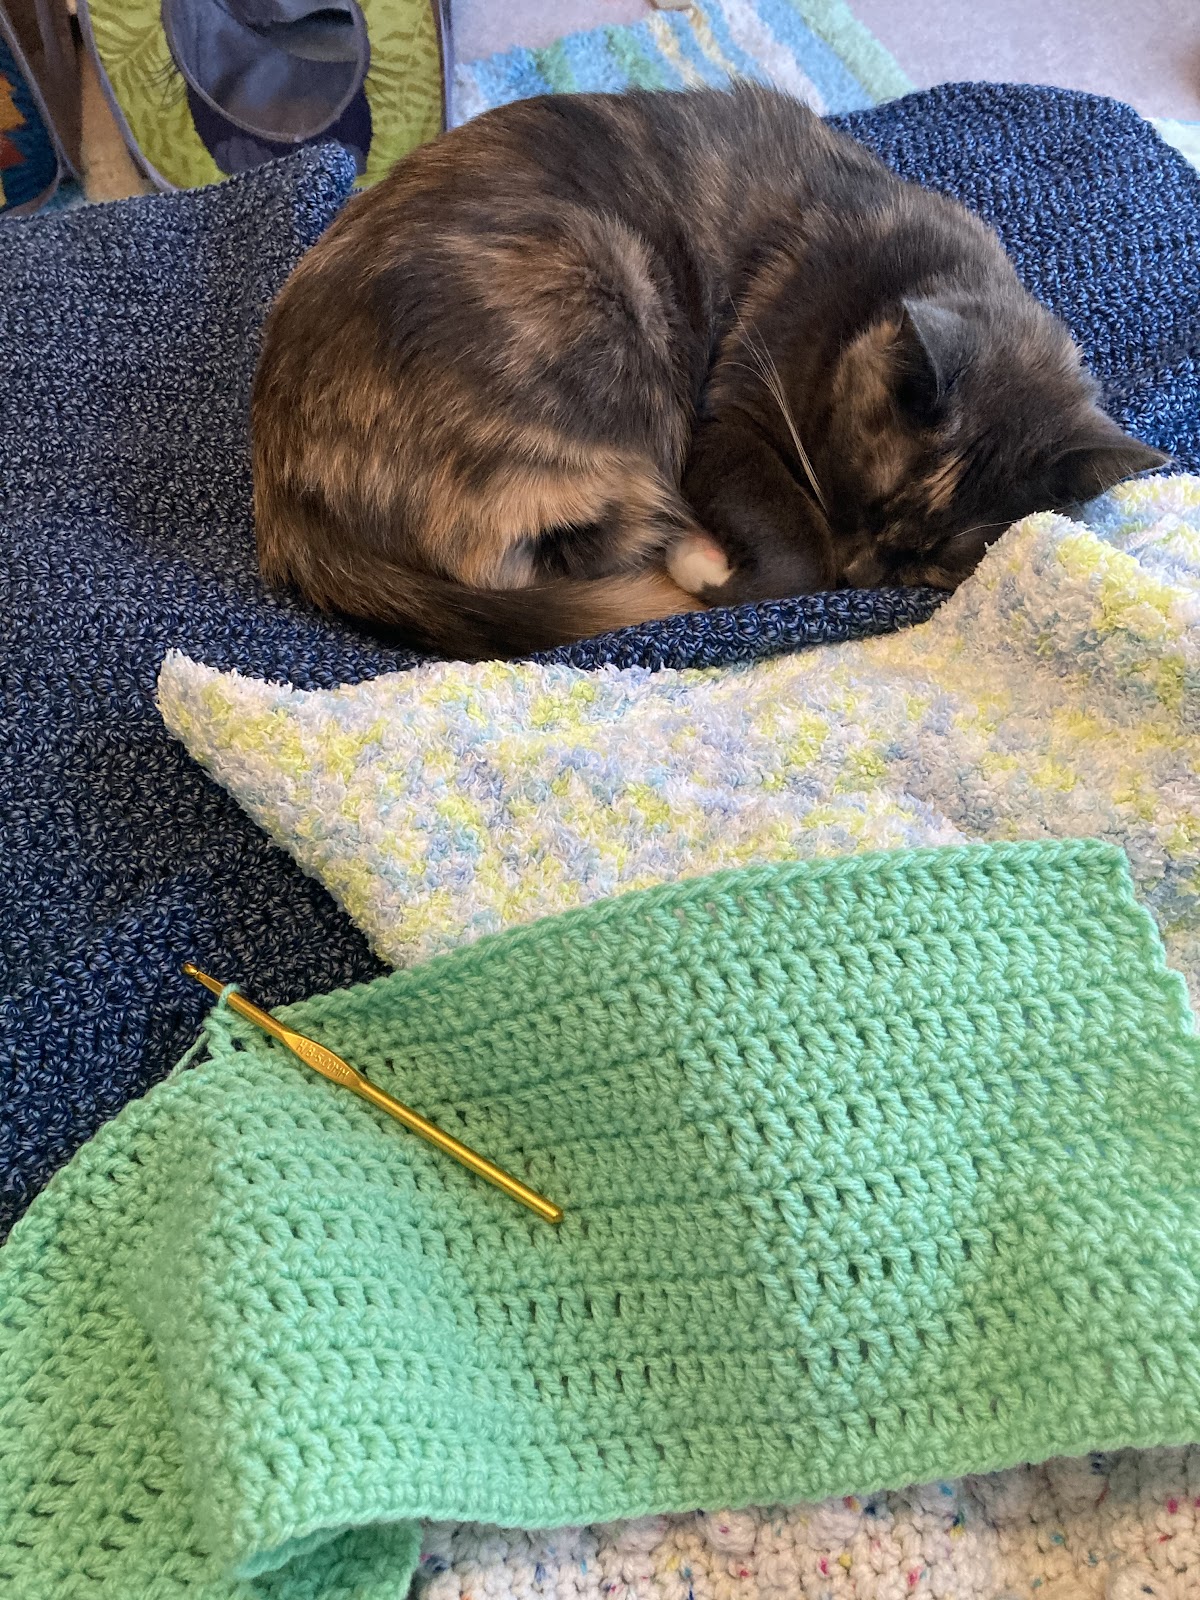 Handmade crocheted blankets for cats